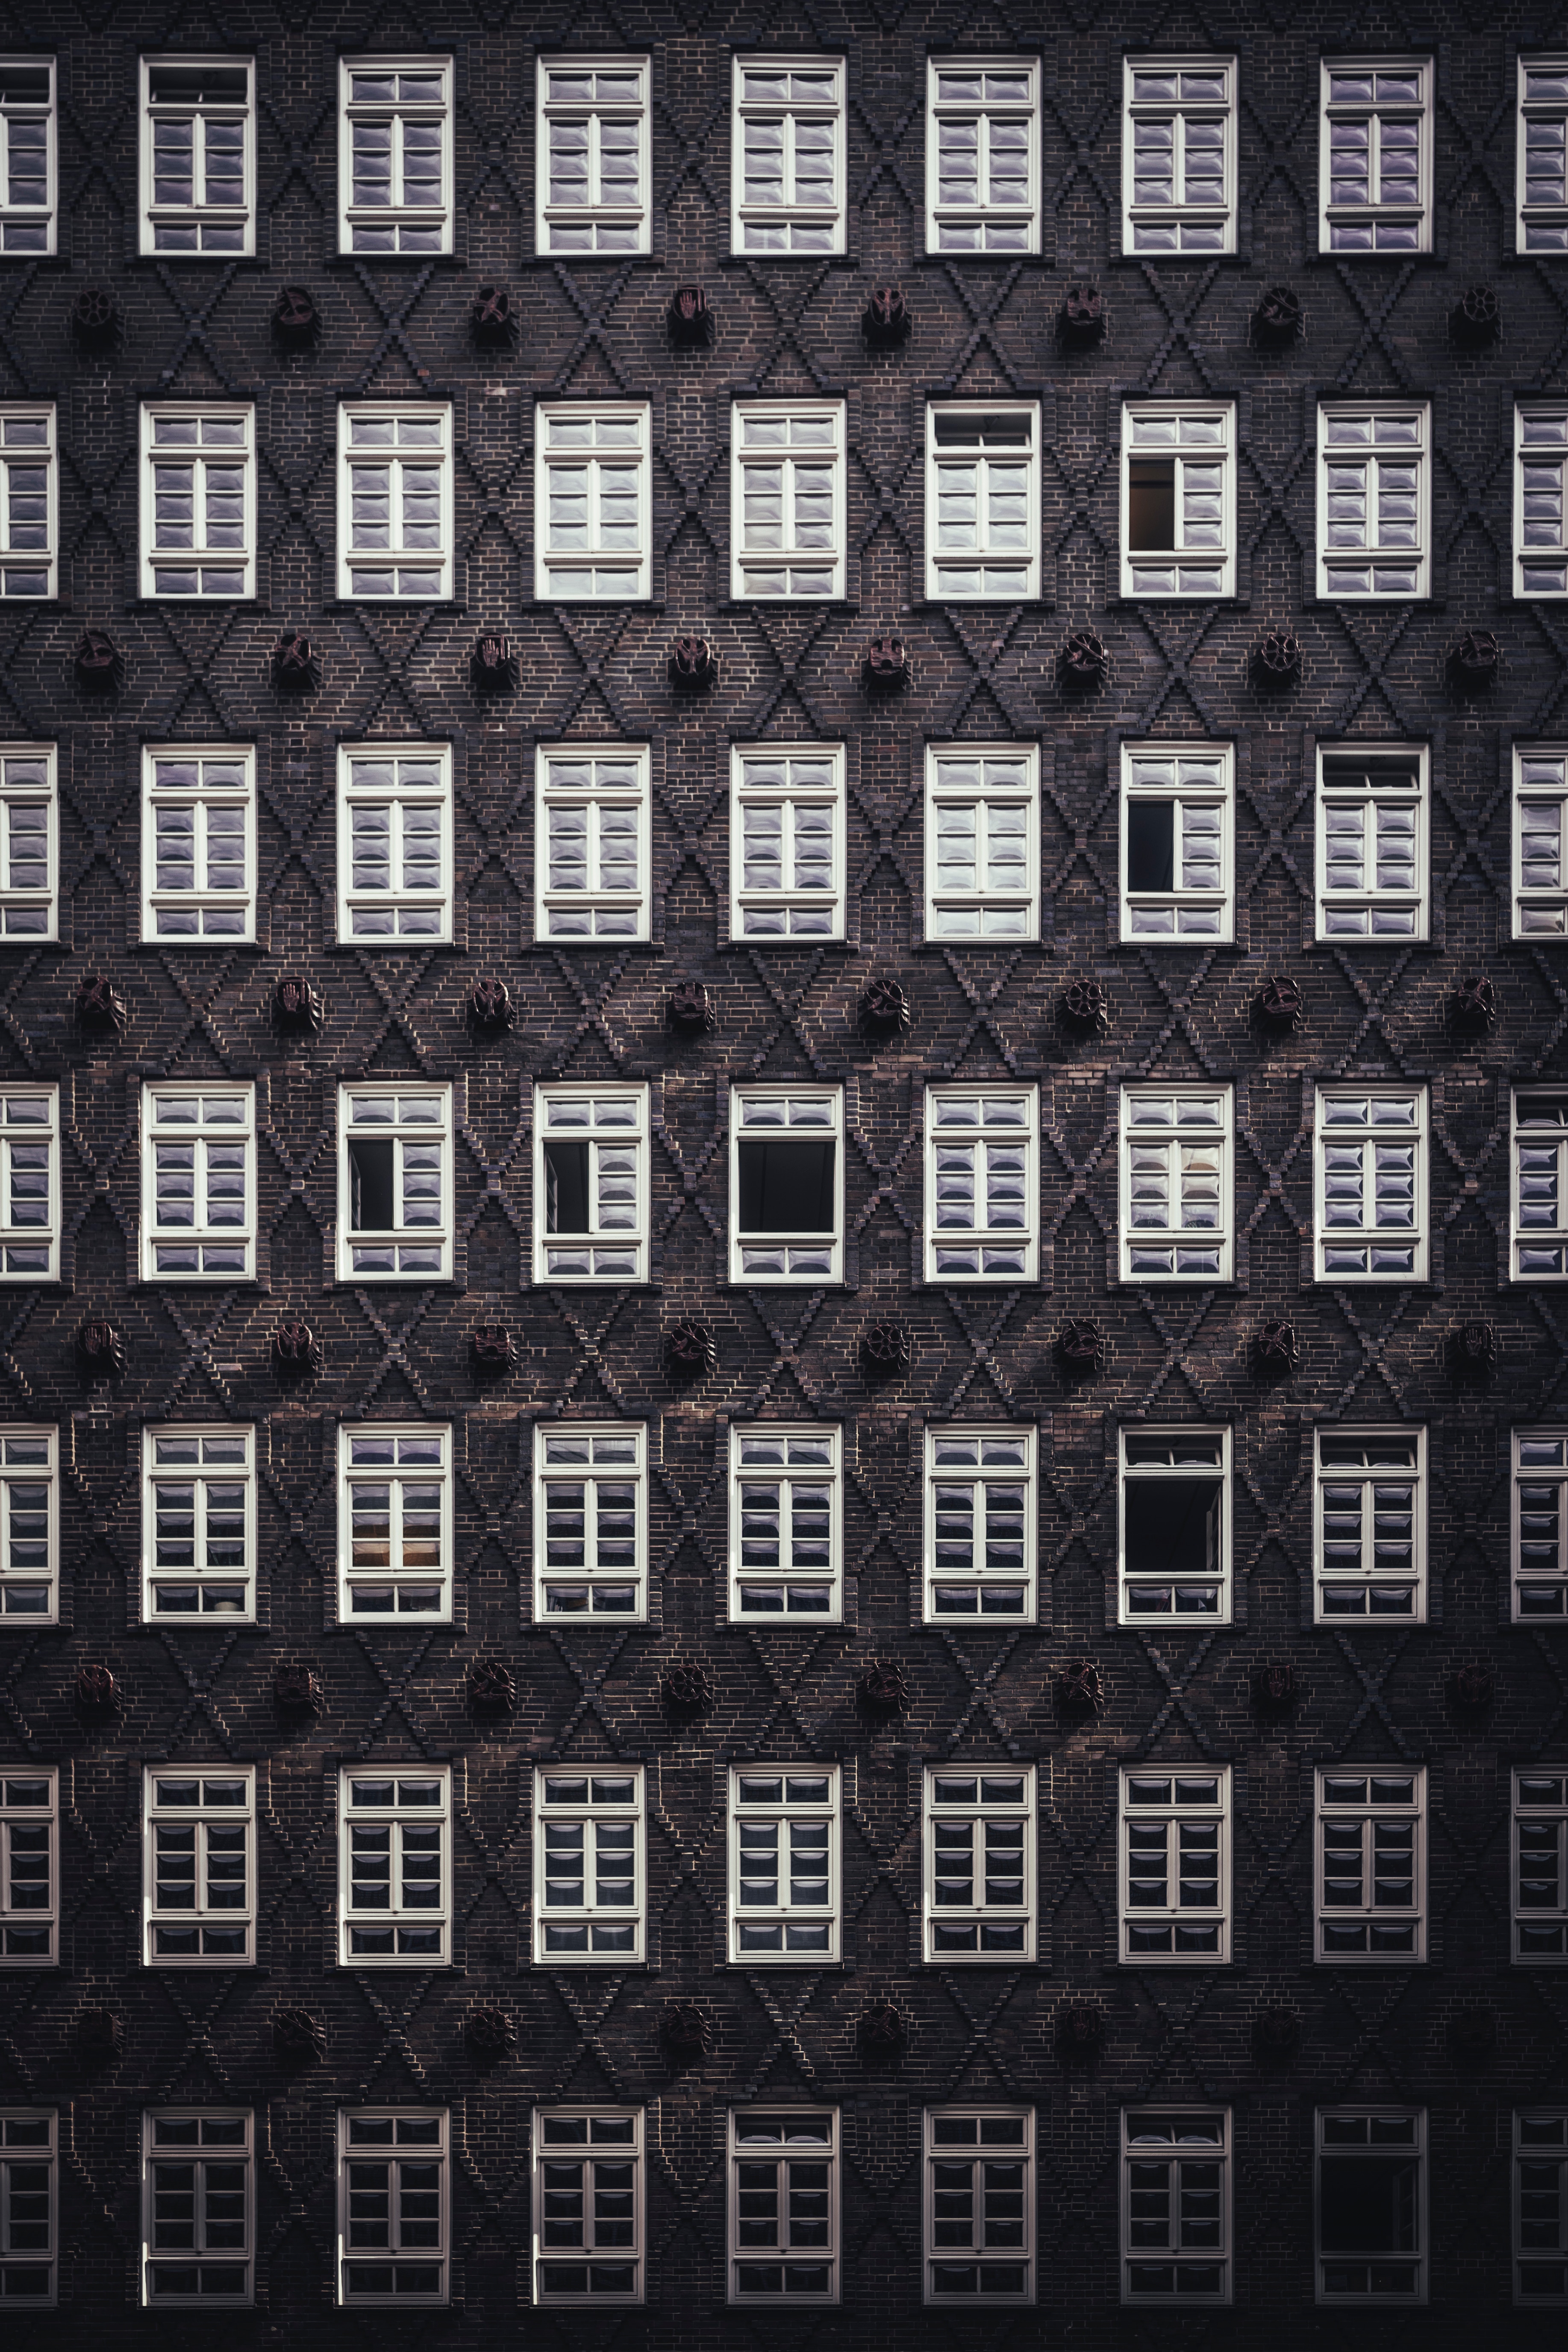 Mobile Wallpaper Windows building, miscellanea, facade, architecture